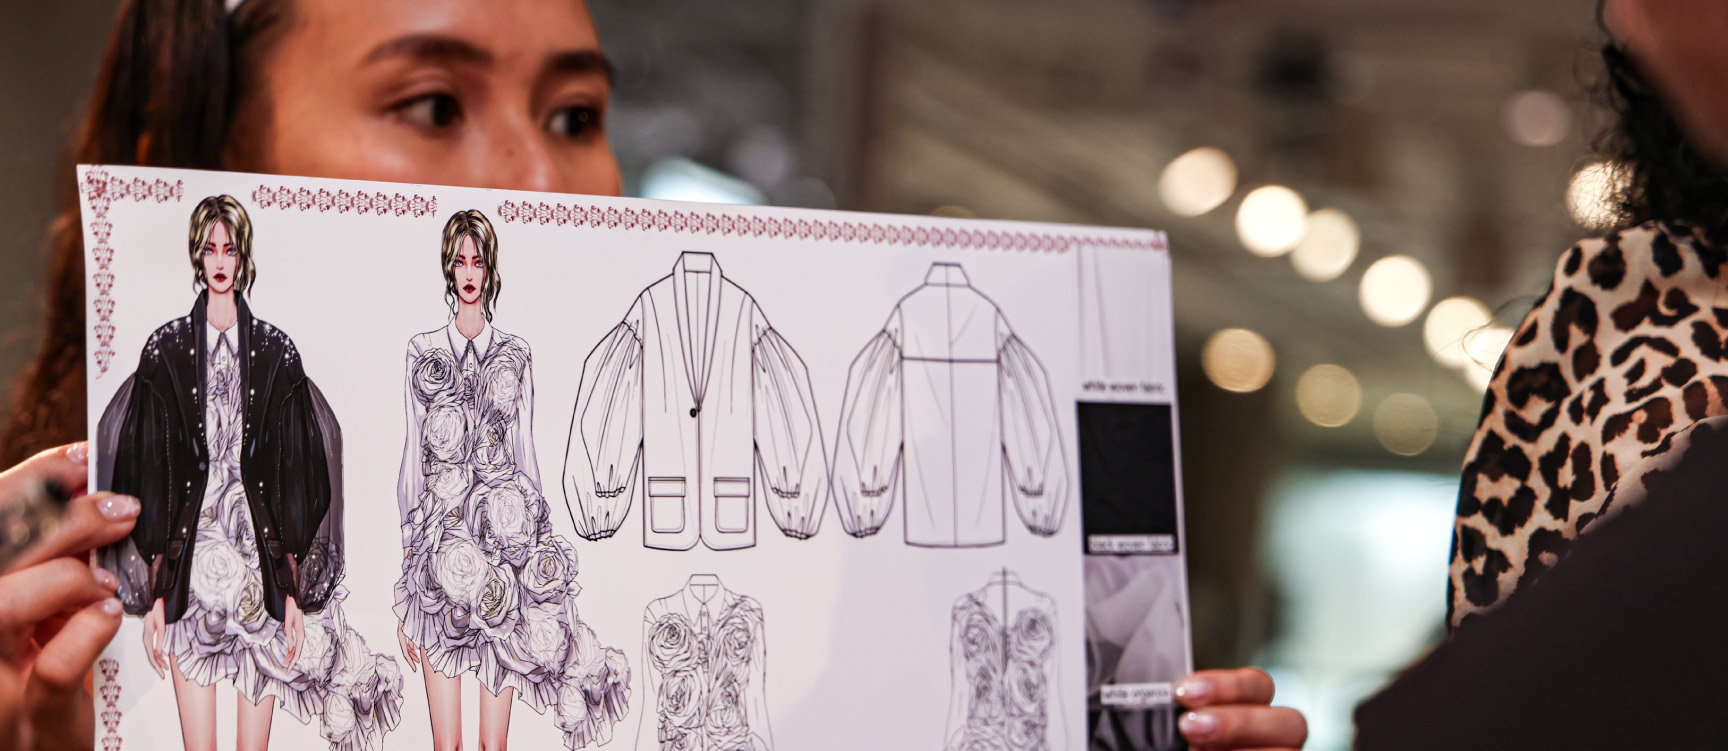 Fashion design student presenting a sketch